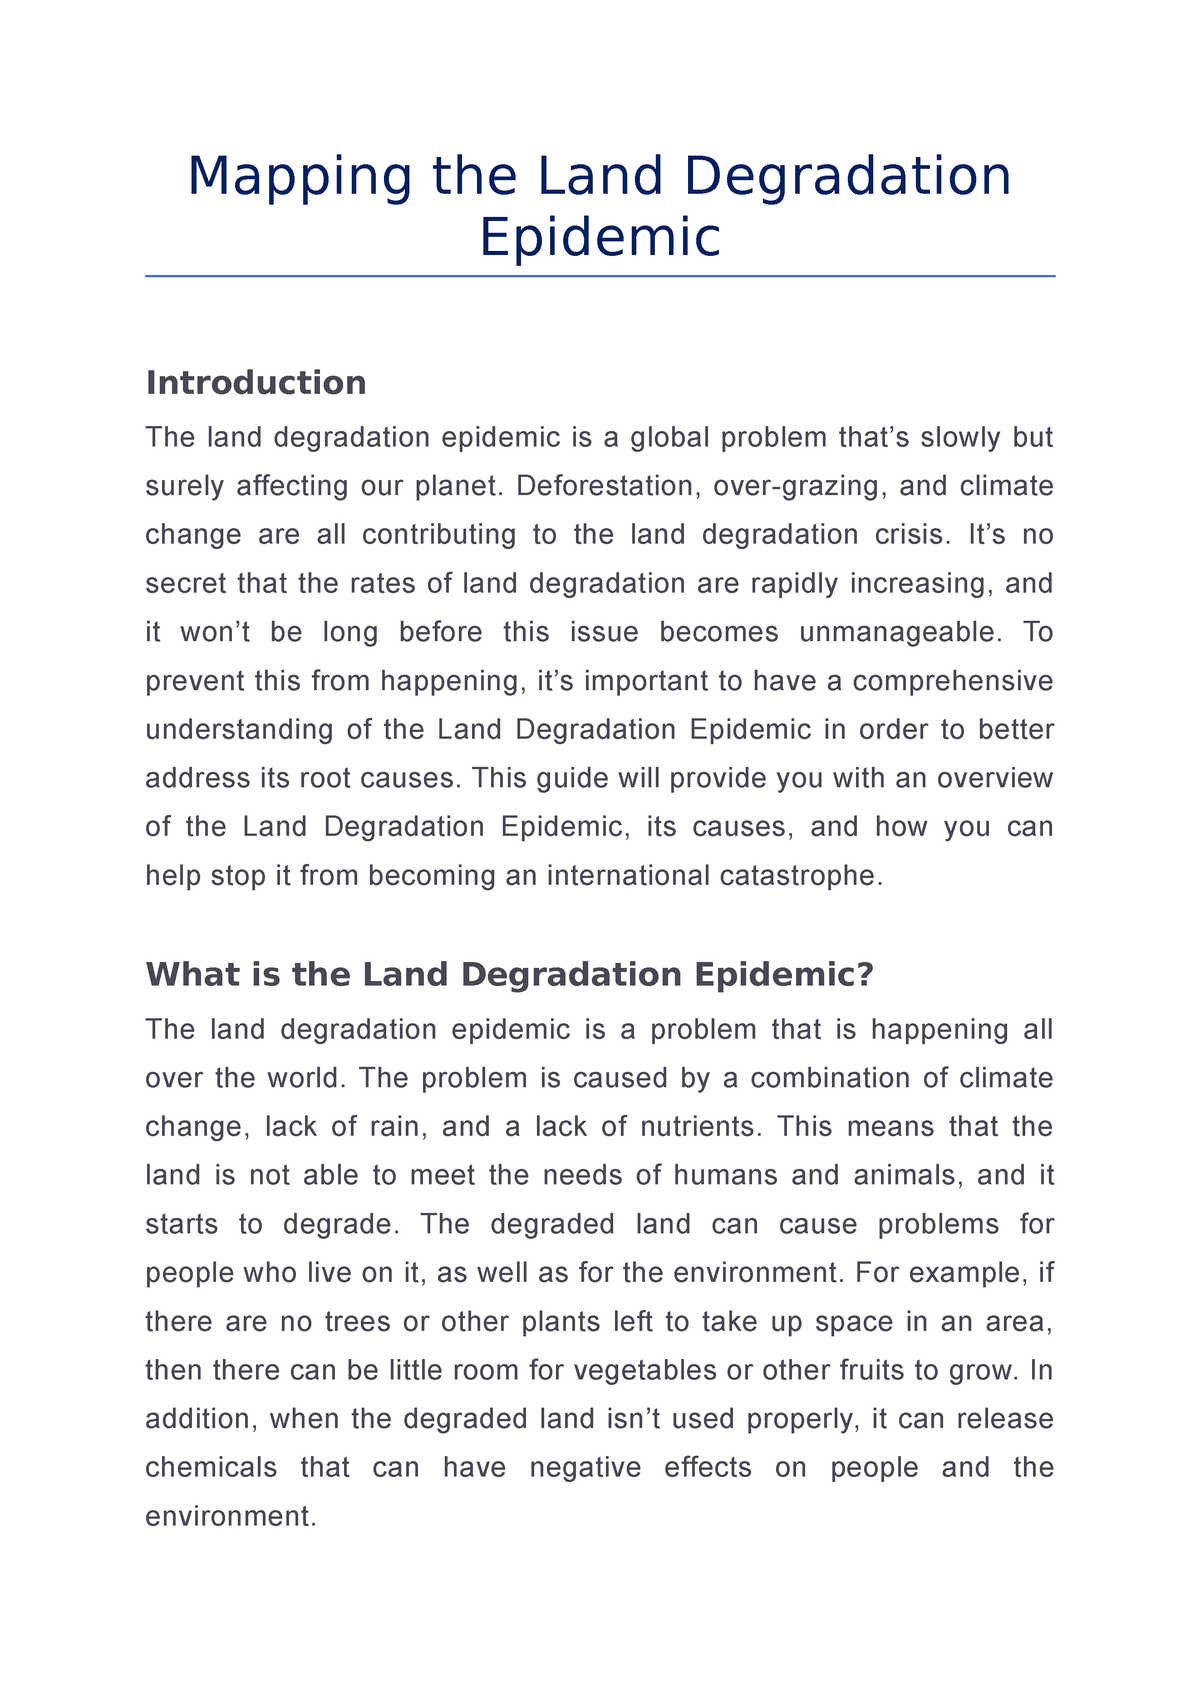 literature review on land degradation